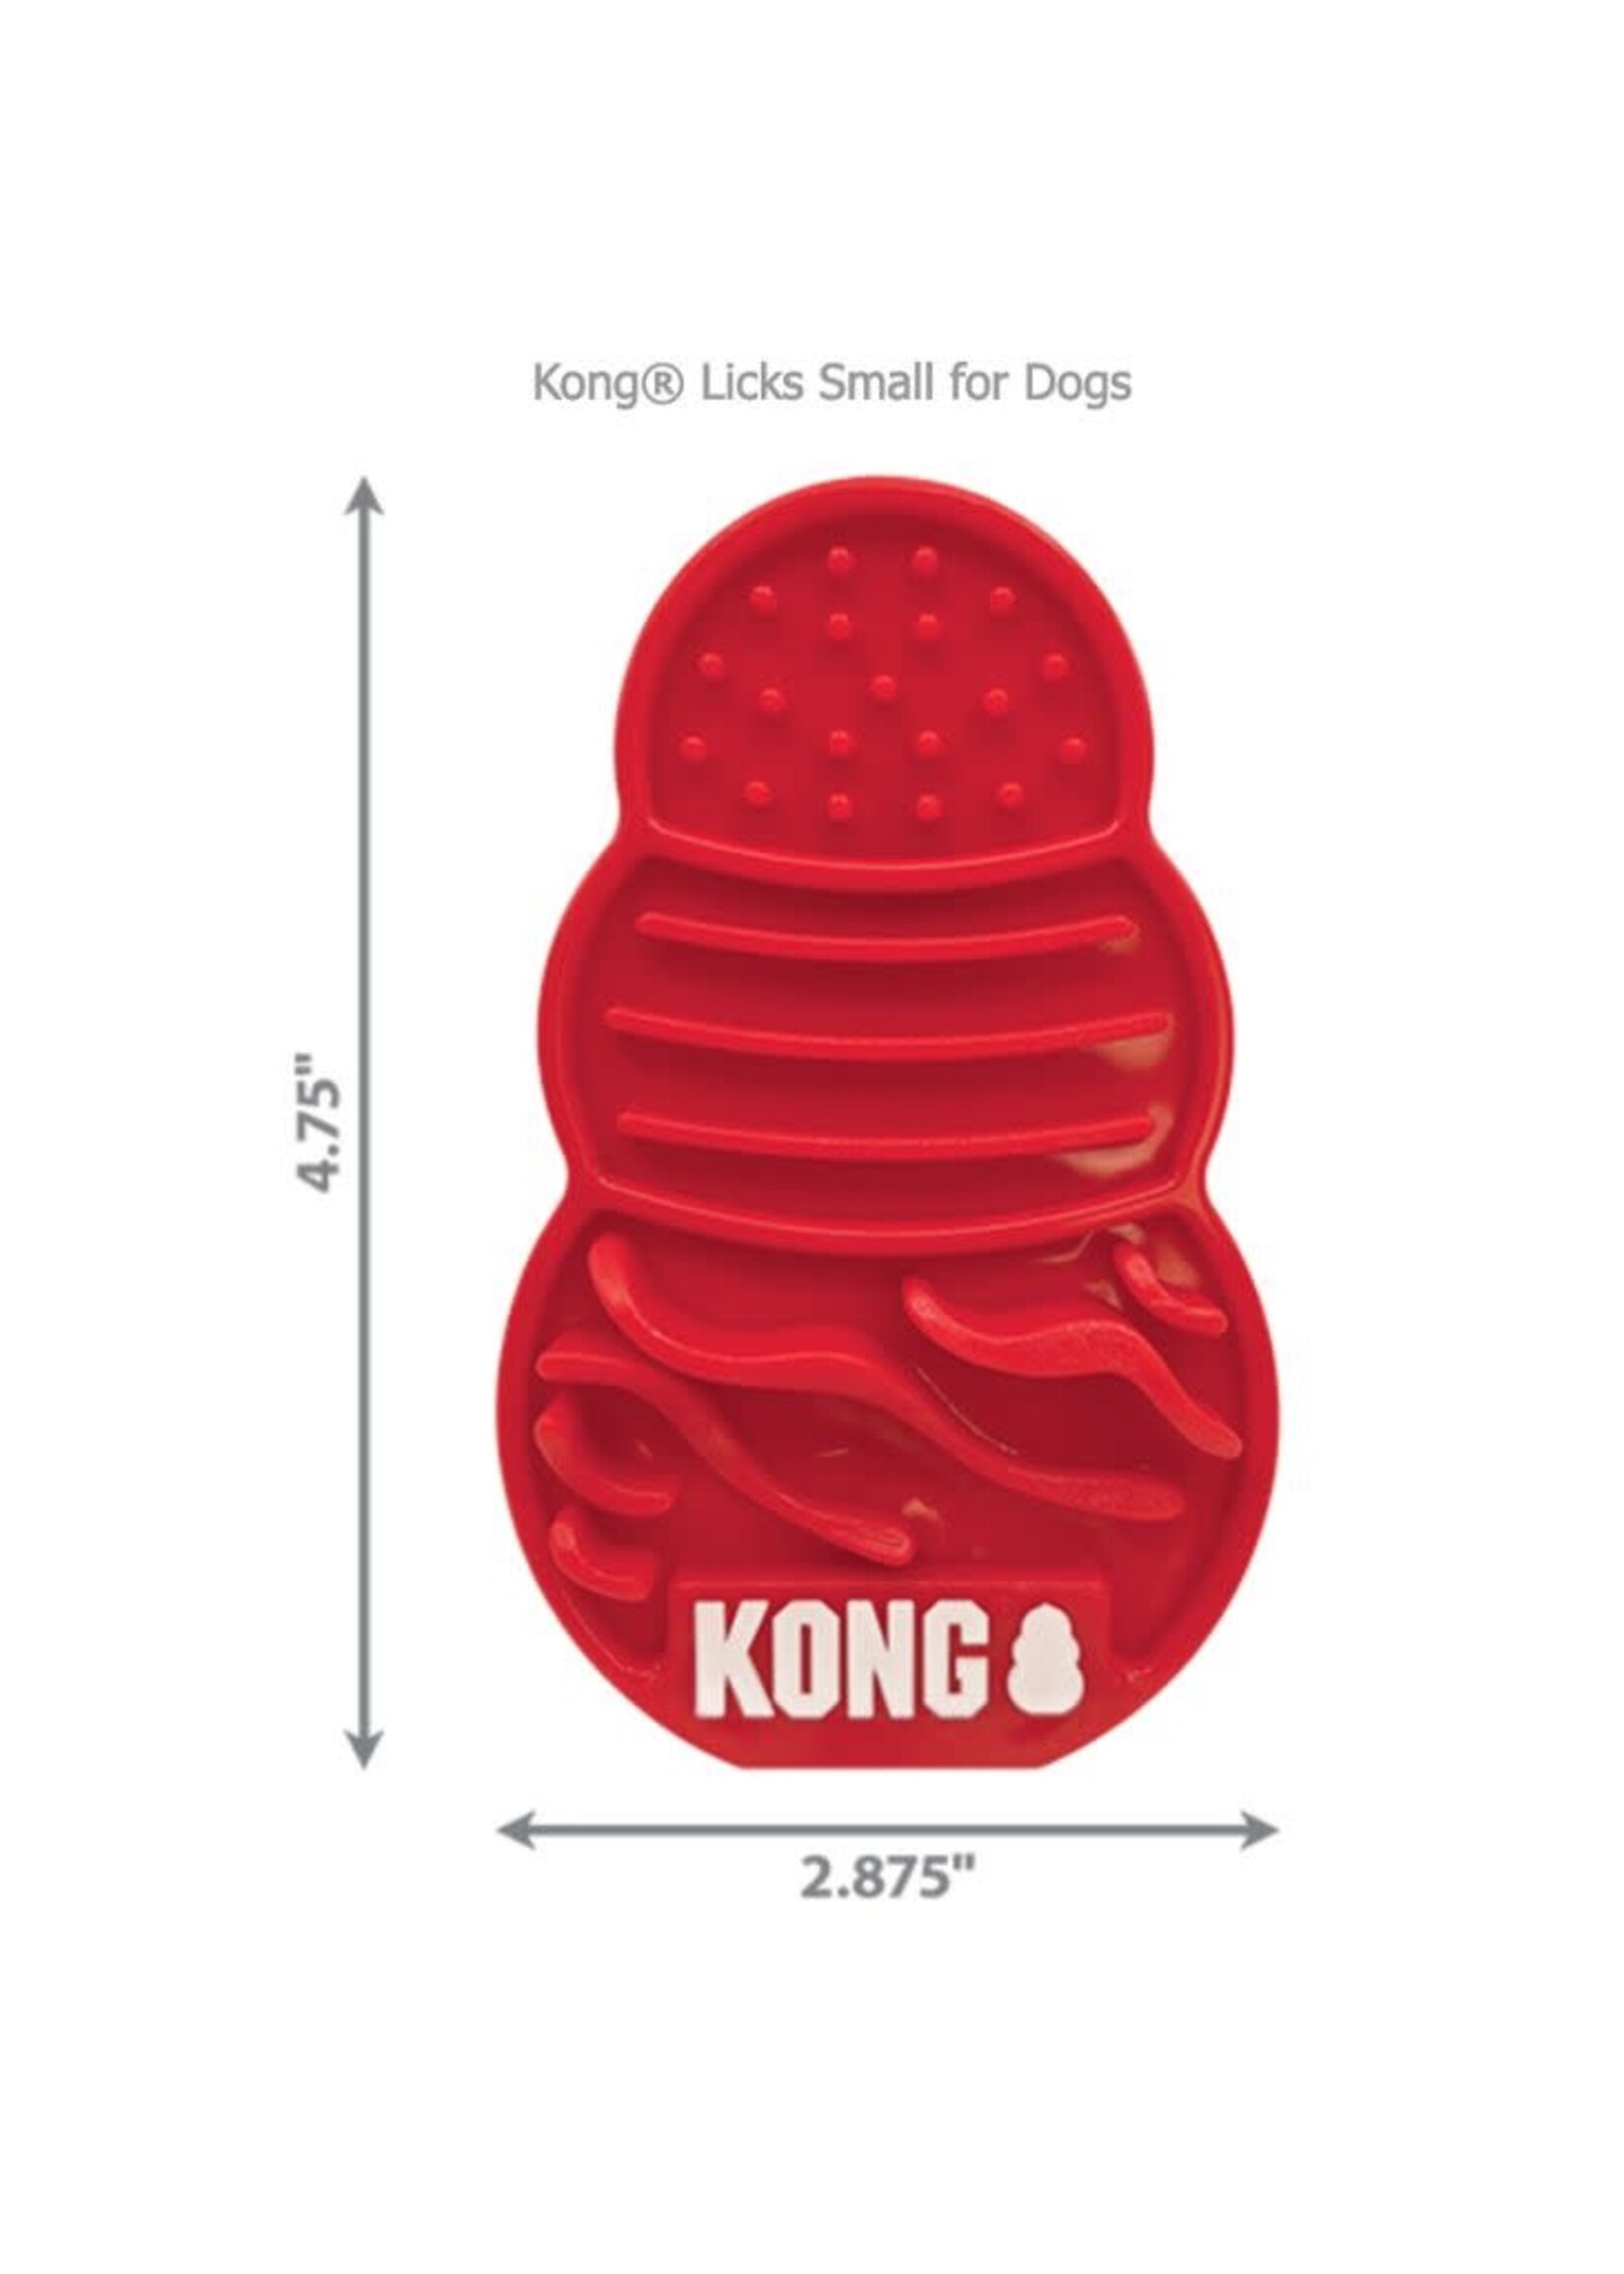 Kong® Licks Small for Dogs